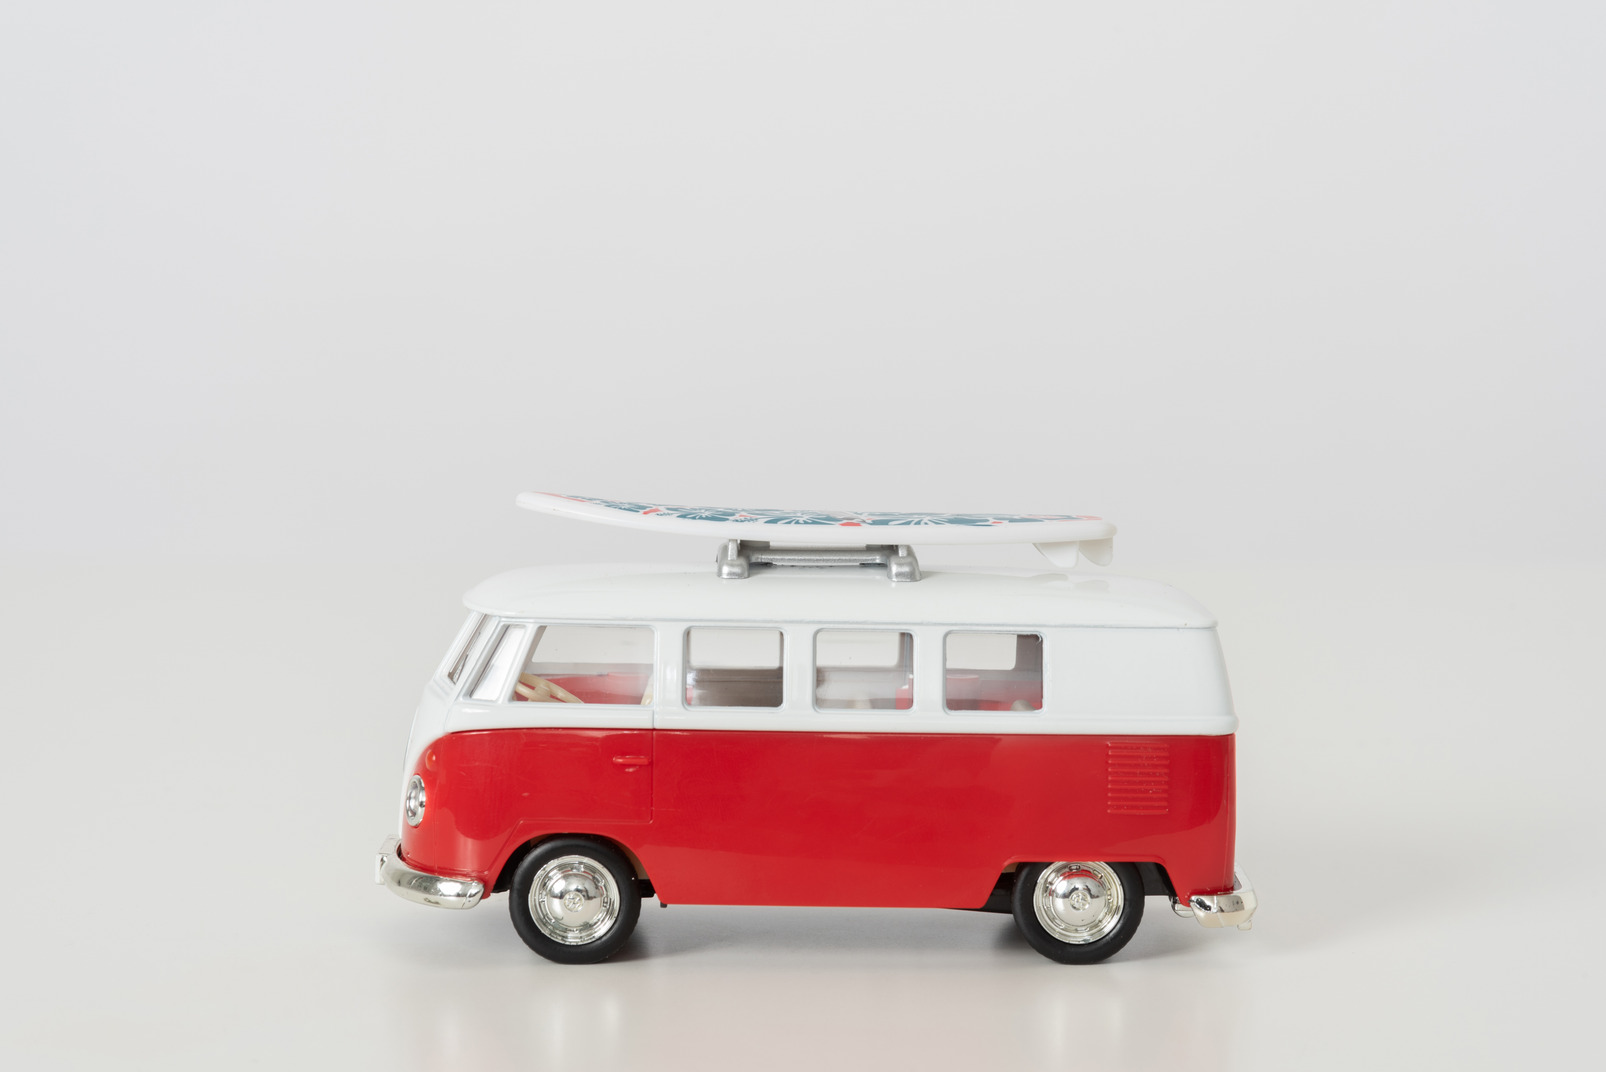 Toy hippie autobus in profile on grey background